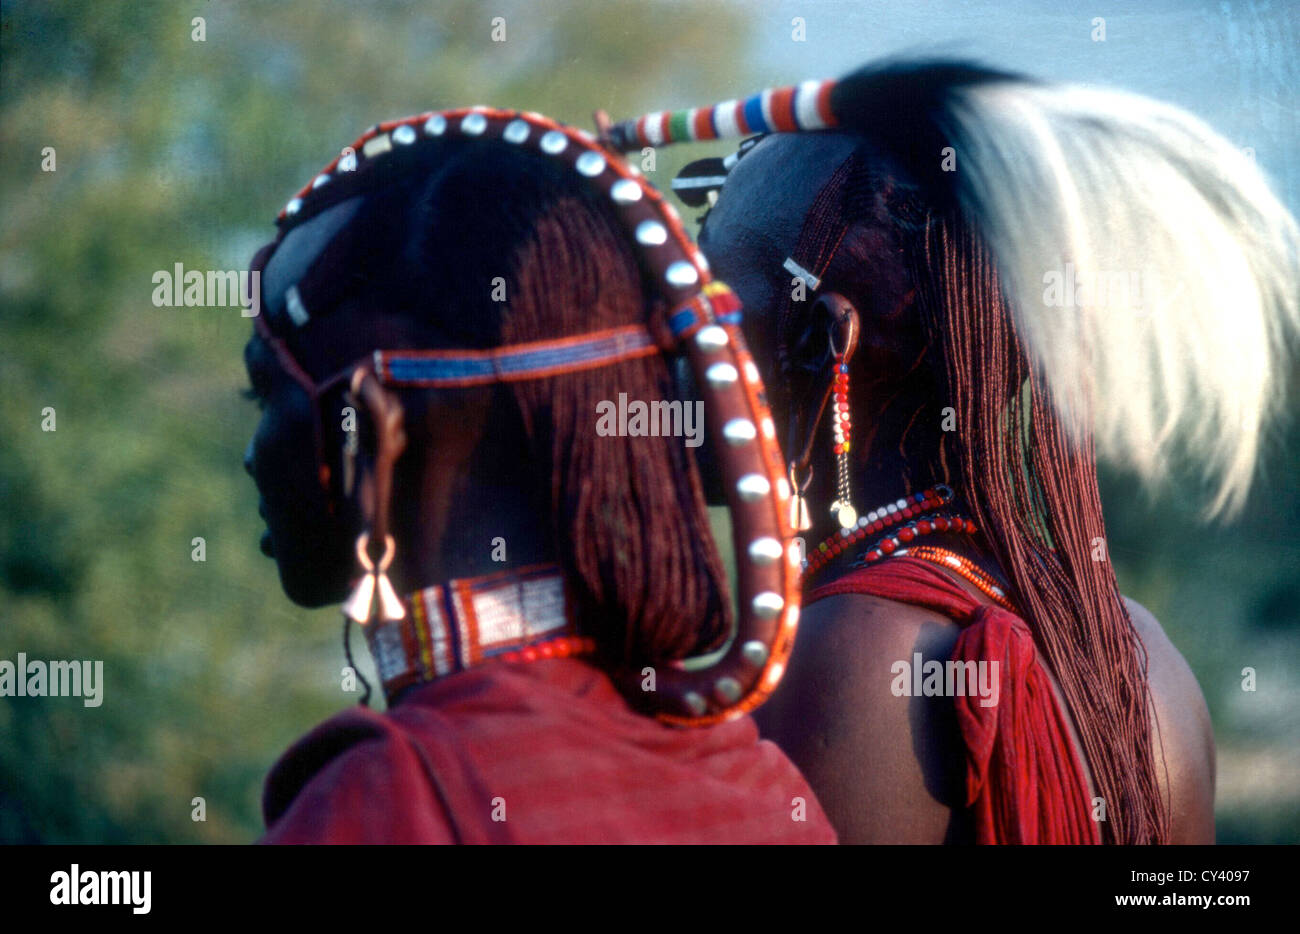 DISTINCTIVE HEADRESS WORN BY A COUPLE OF MASSAI IN KENYA Stock Photo